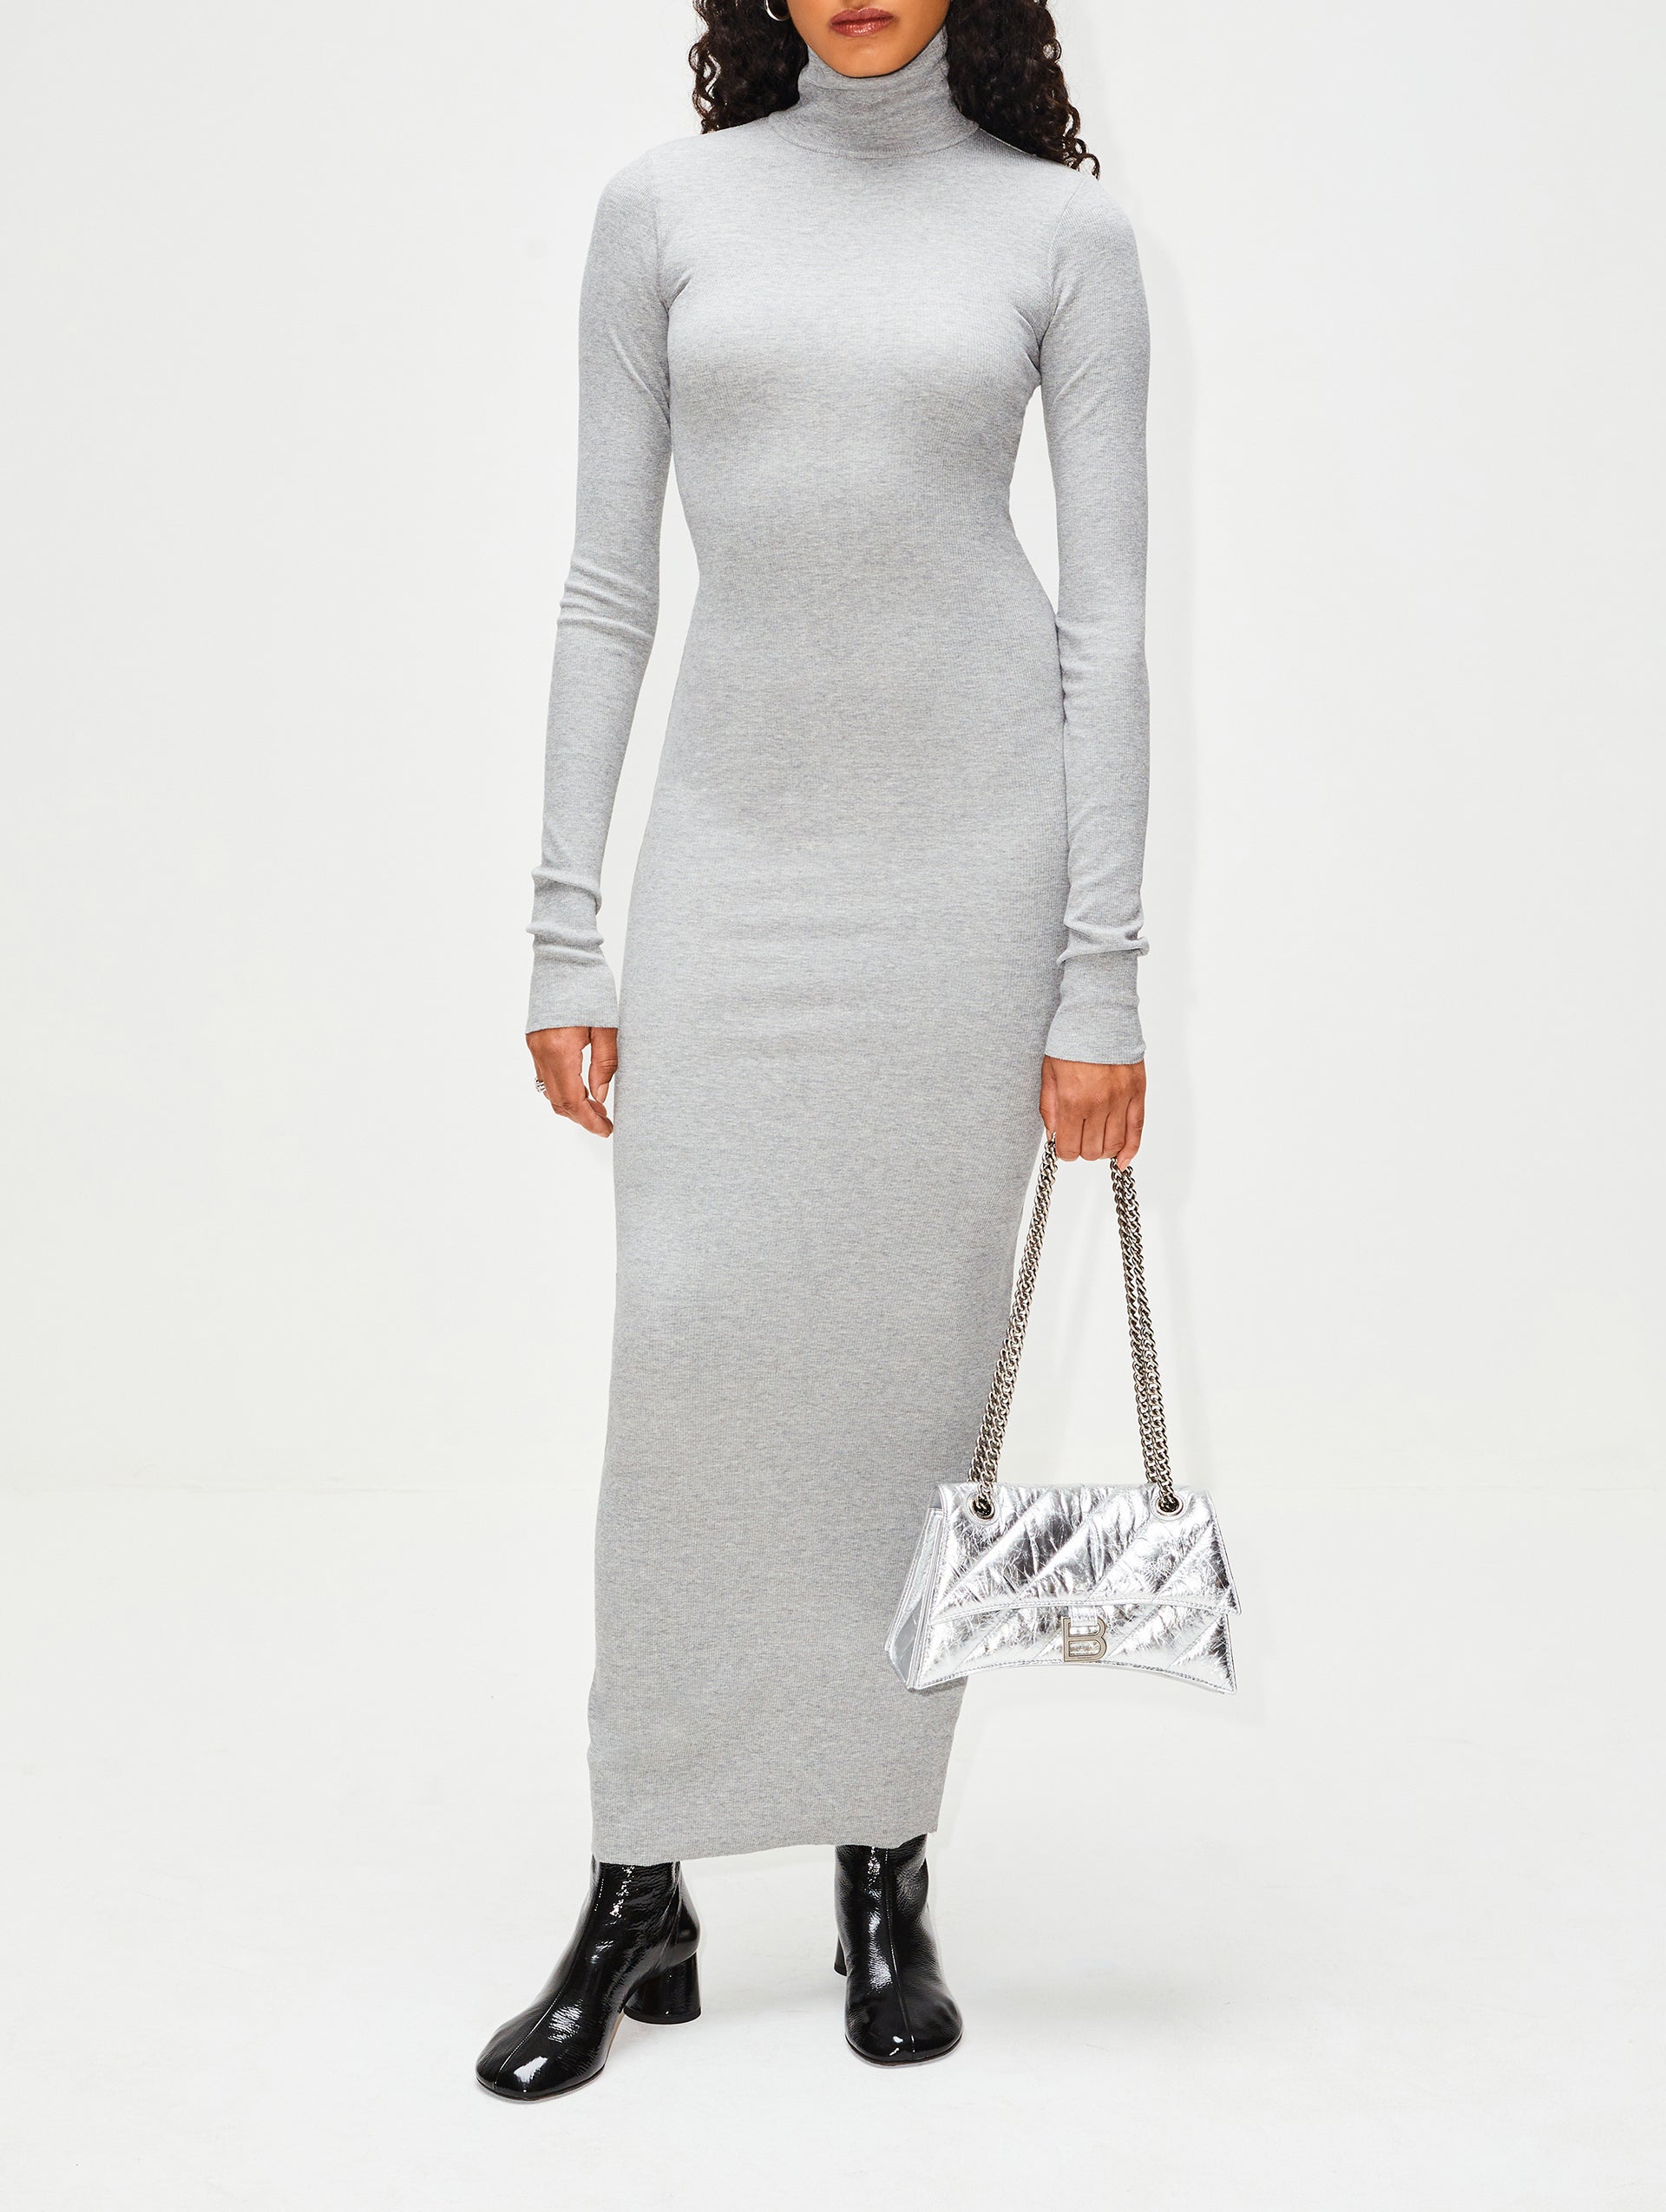 Eterne Long Sleeve Turtleneck Mini Dress, Butter Soft Ribbed Cotton, Form Fitting, Grey, L